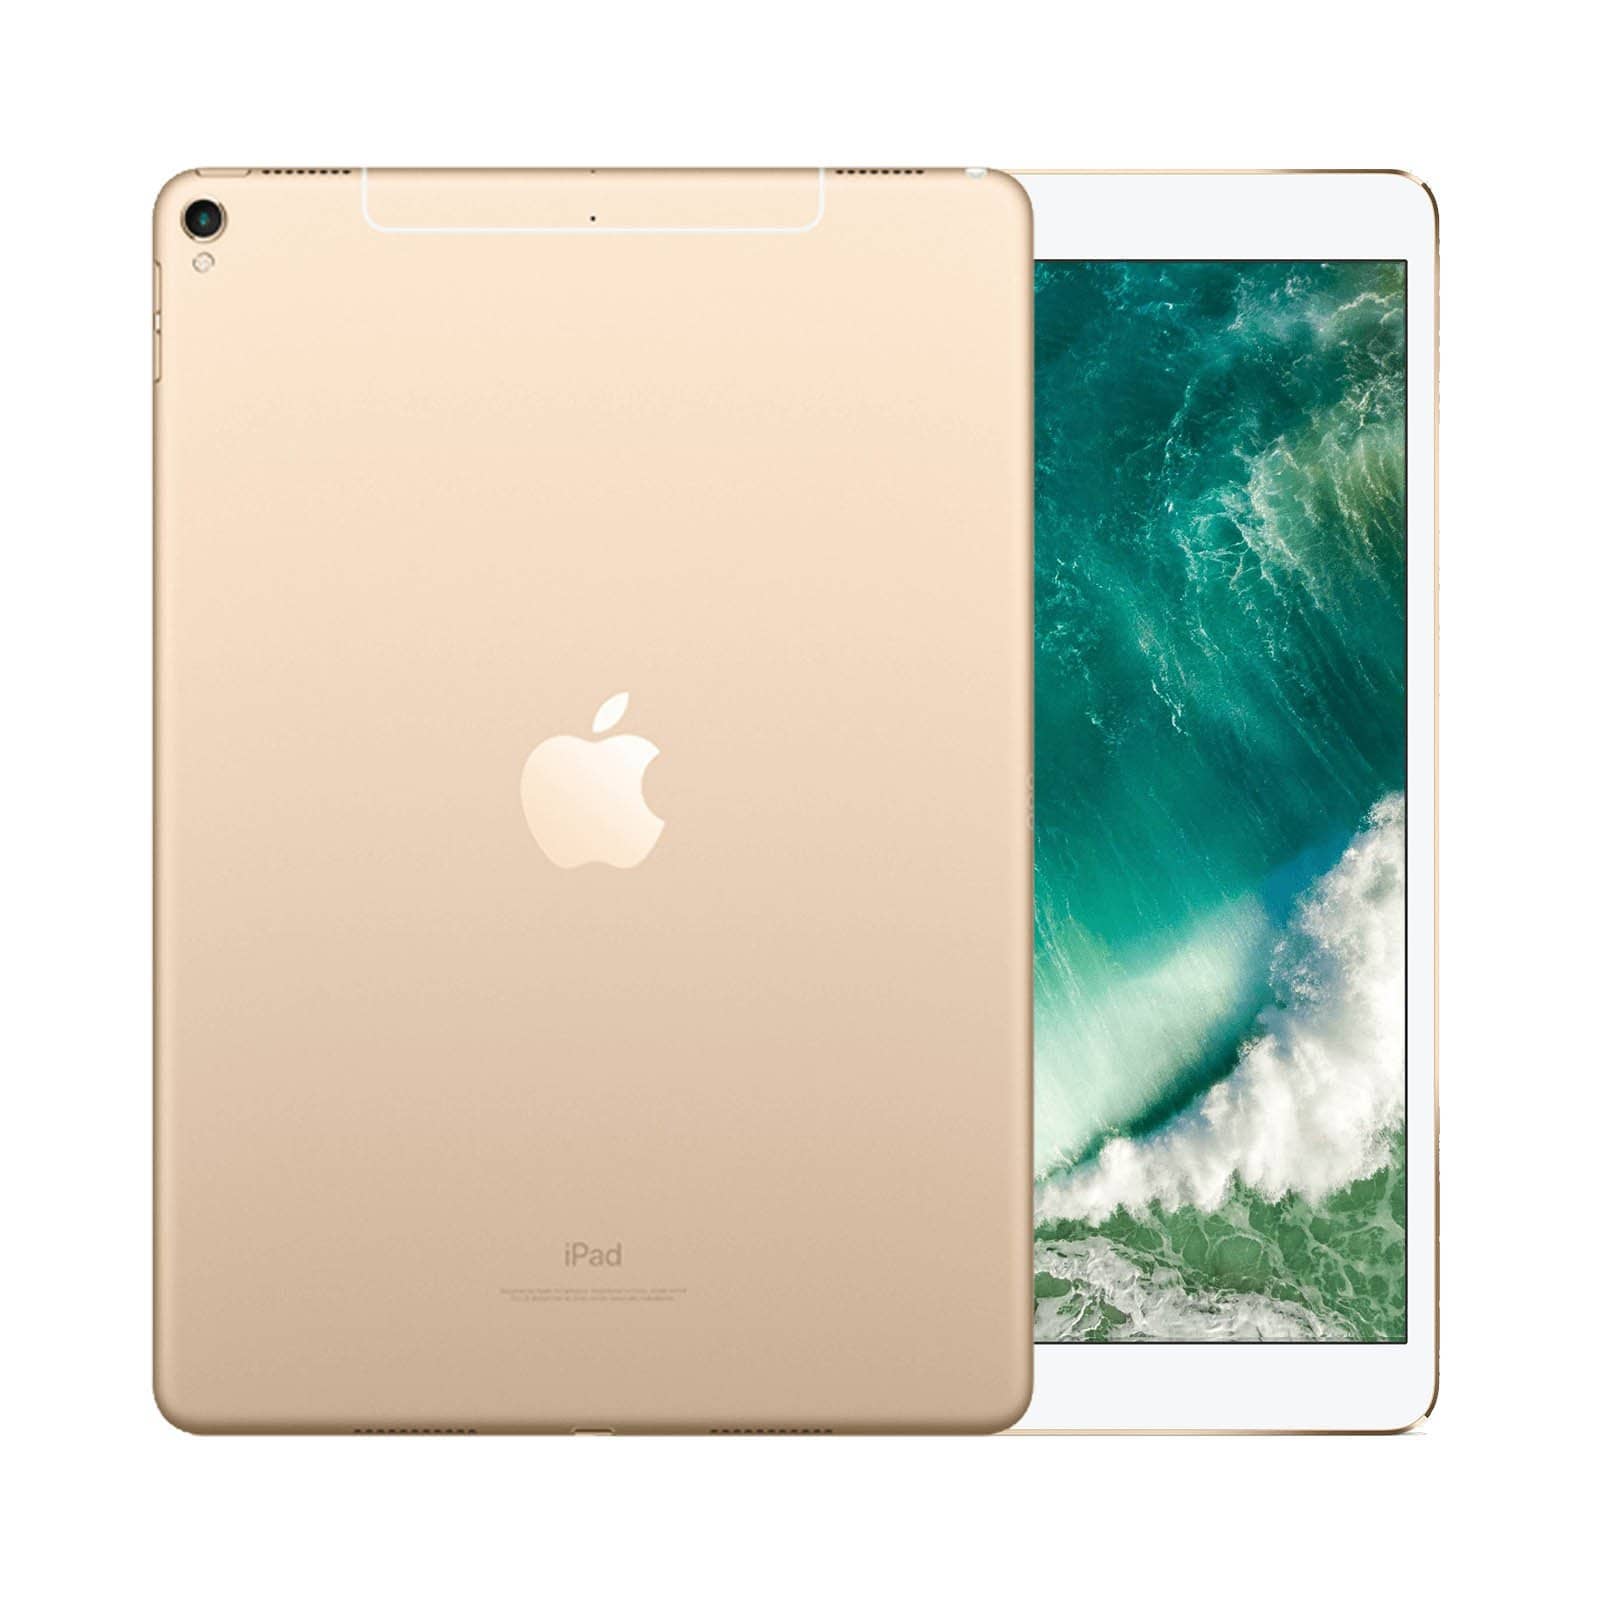 iPad Pro 10.5 Inch 512GB Gold Pristine - Unlocked 512GB Gold Pristine